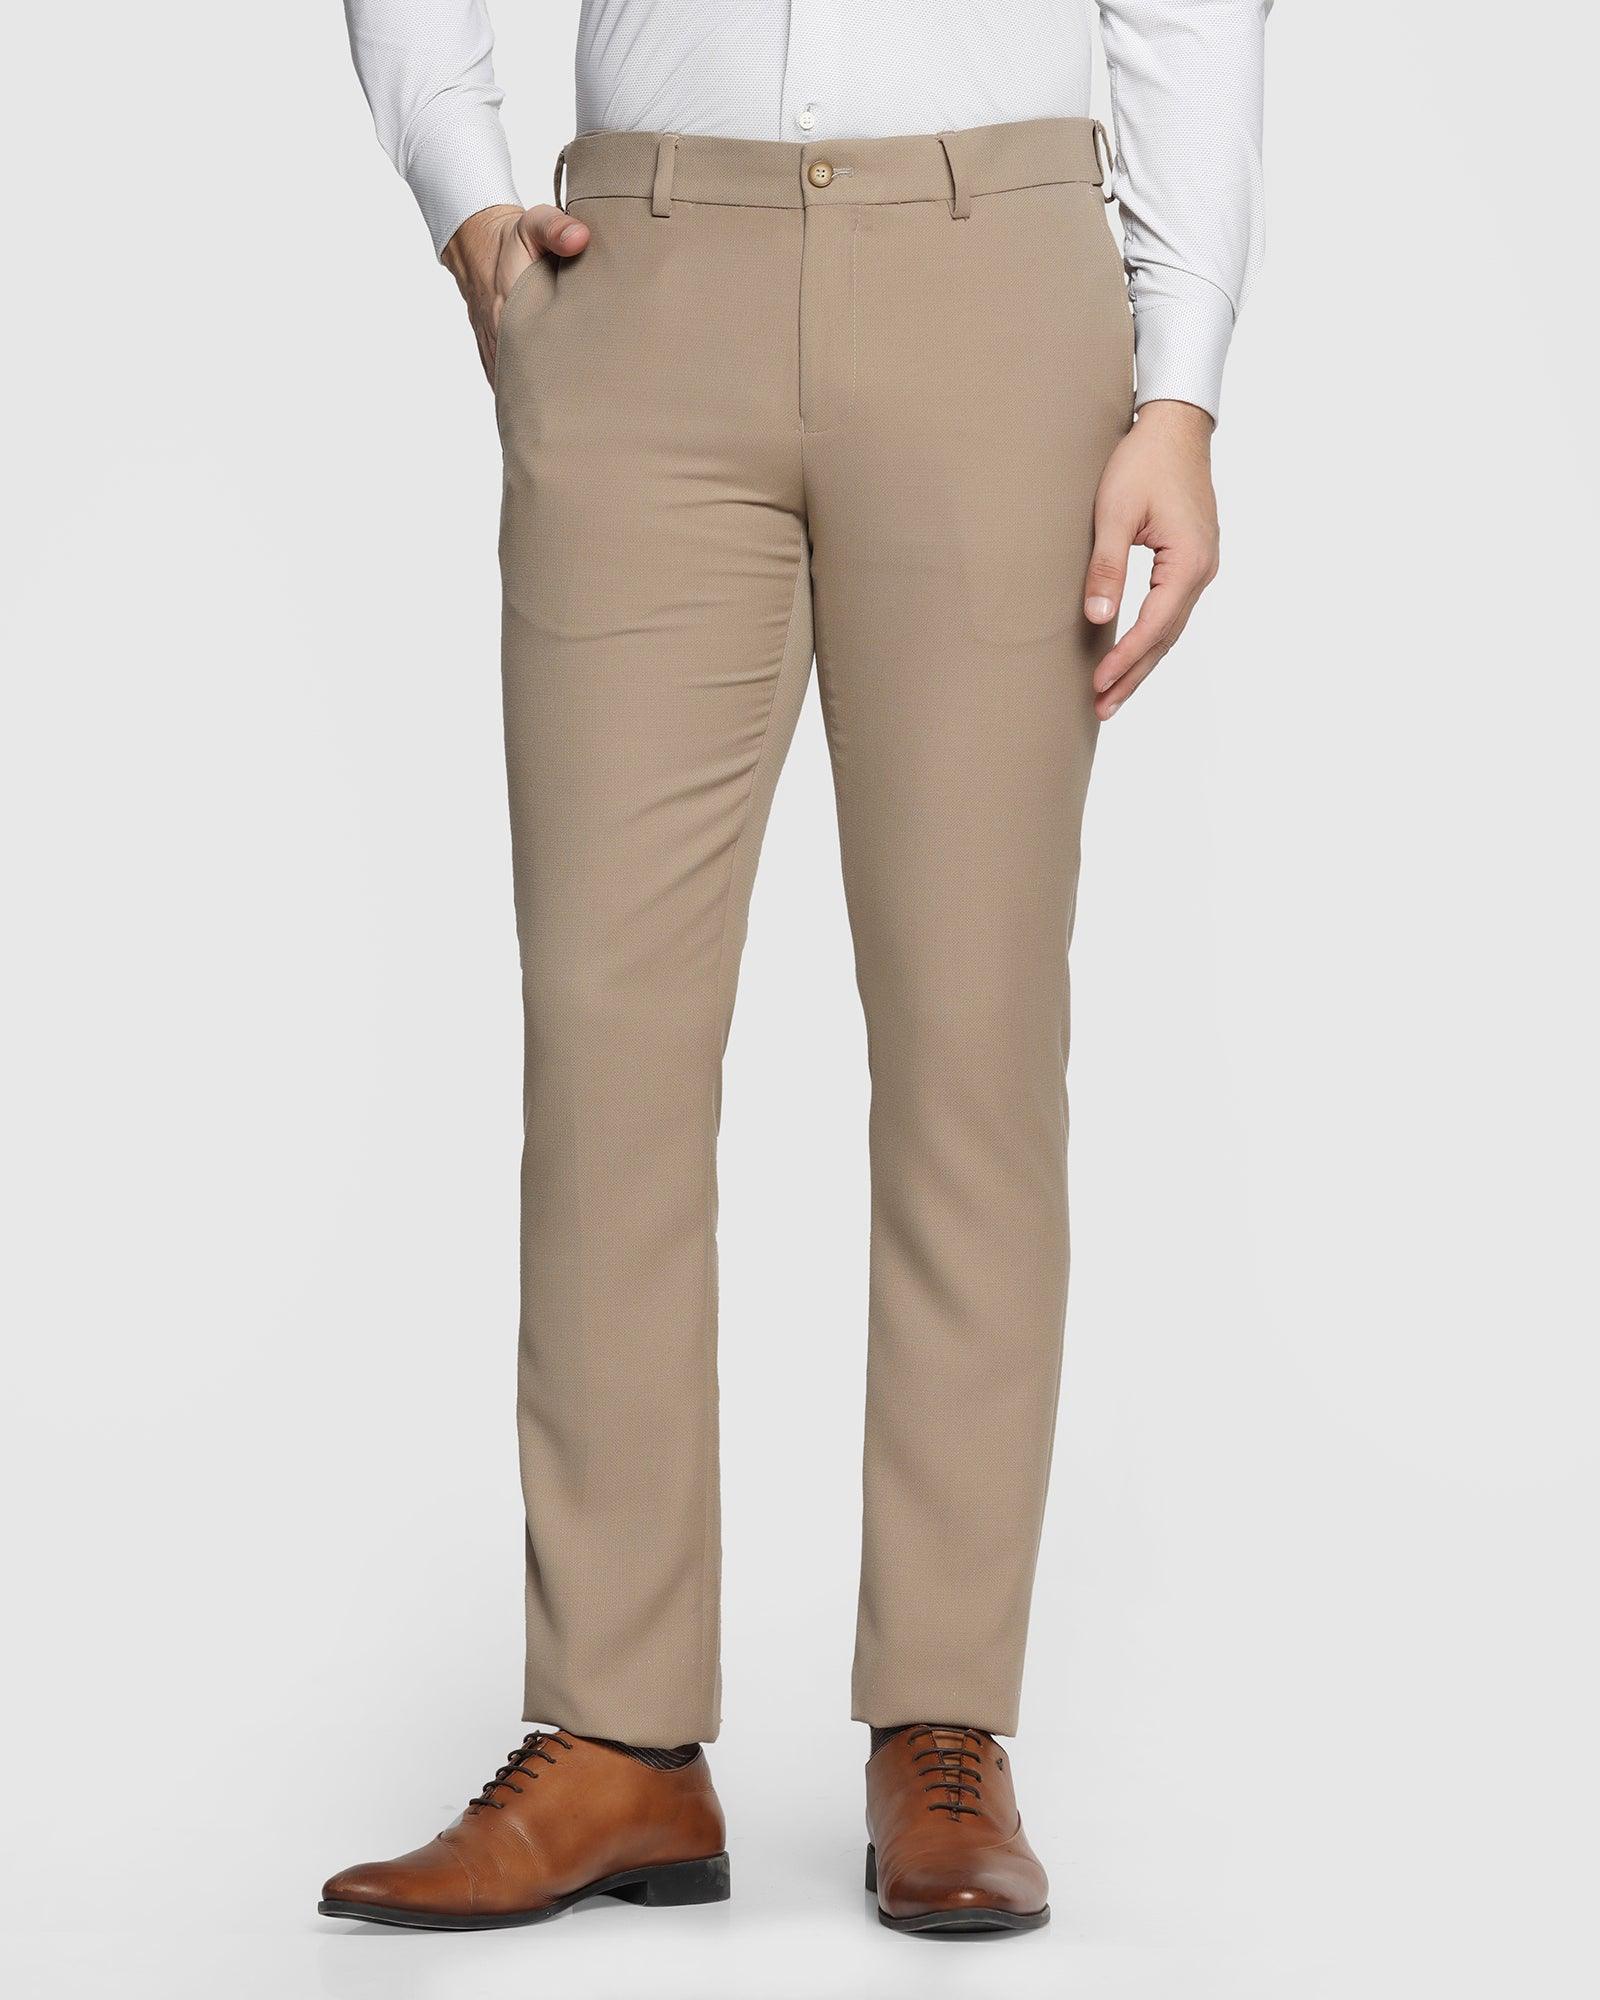 Slim Fit B-91 Formal Khaki Textured Trouser - Miron